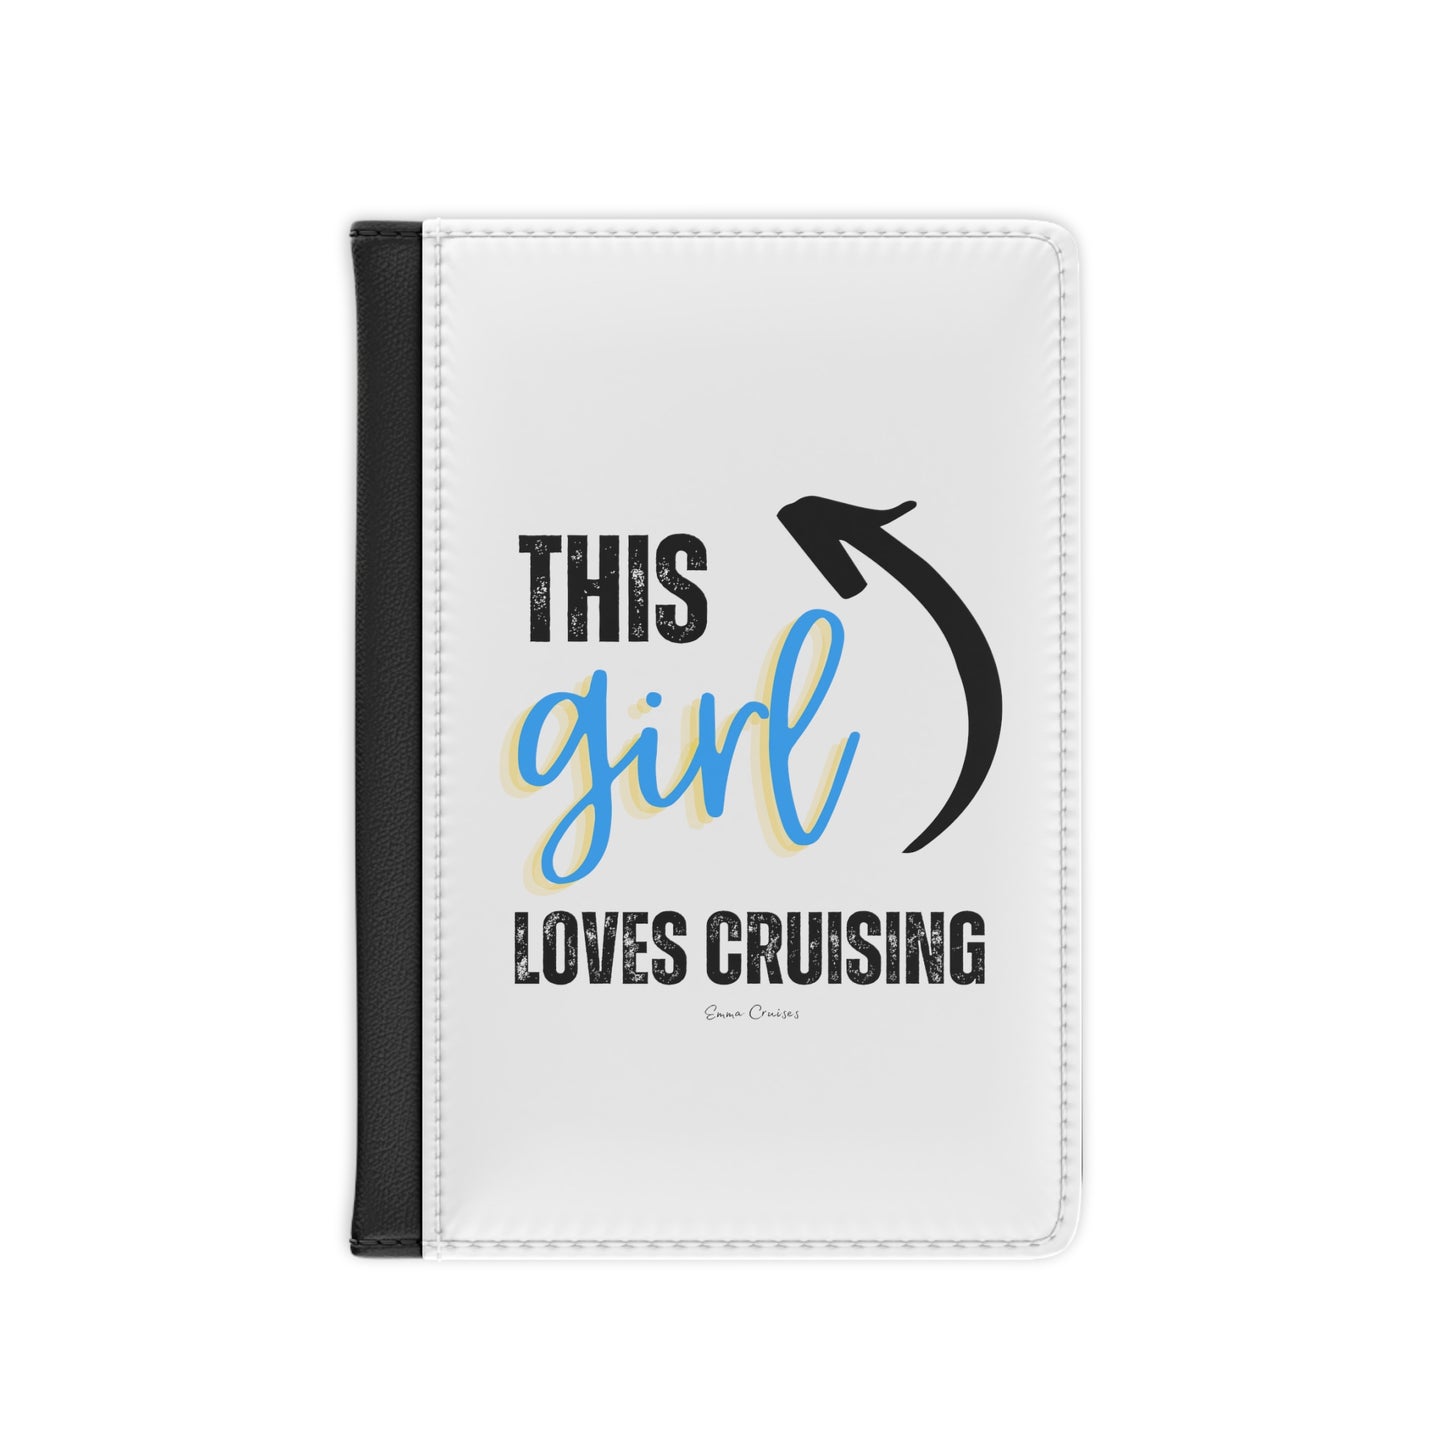 This Girl Loves Cruising - Passport Cover